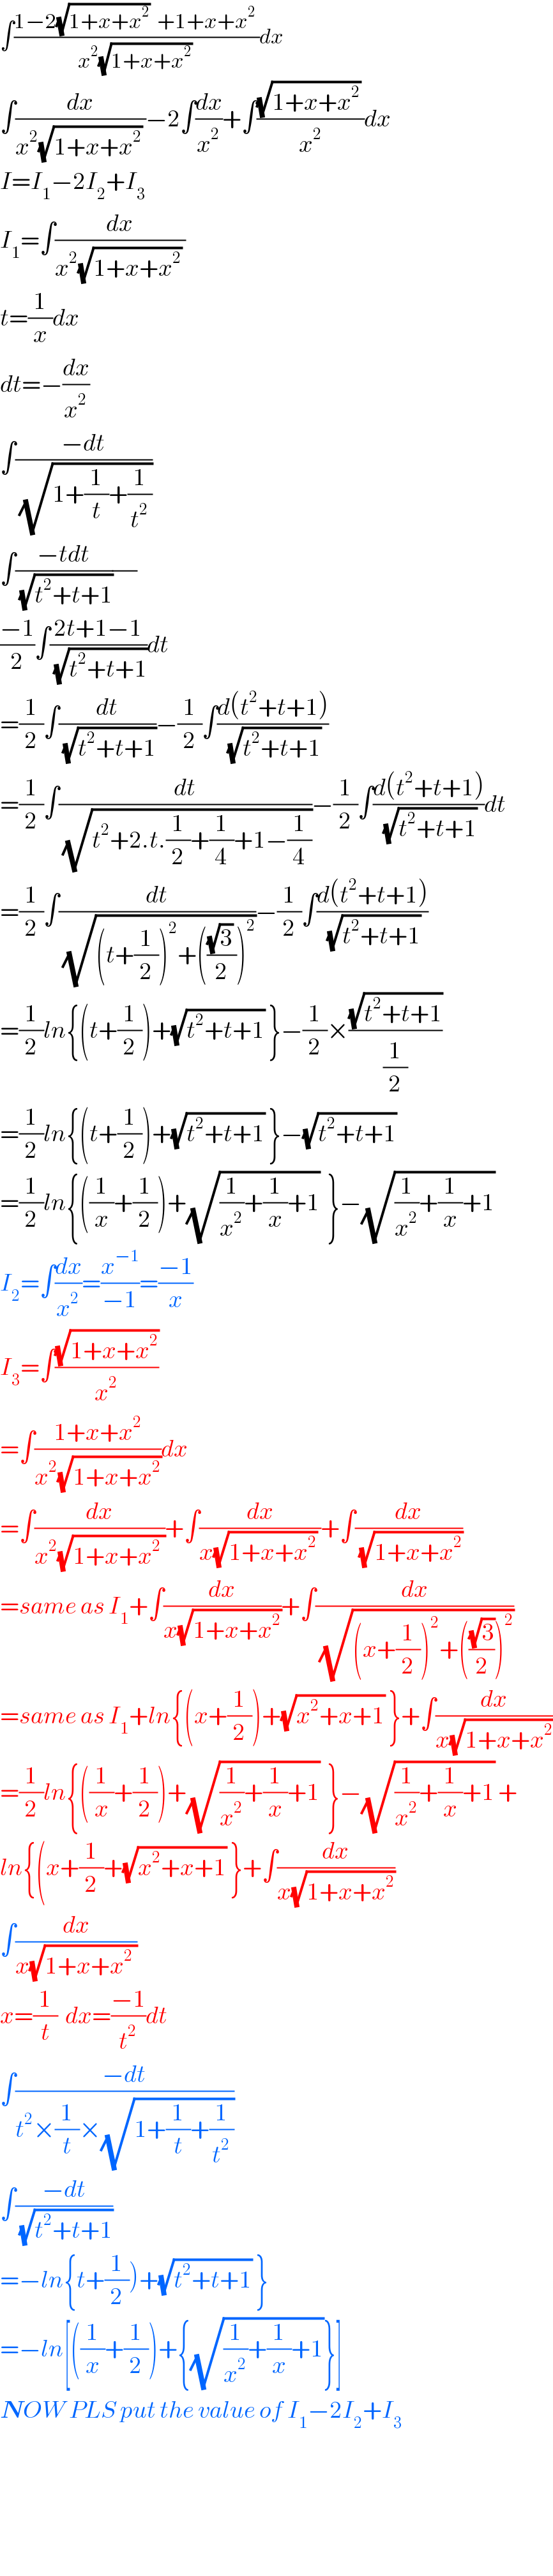 ∫((1−2(√(1+x+x^2 ))  +1+x+x^2  )/(x^2 (√(1+x+x^2 )) ))dx  ∫(dx/(x^2 (√(1+x+x^2 )) ))−2∫(dx/x^2 )+∫(((√(1+x+x^2 )) )/x^2 )dx  I=I_1 −2I_2 +I_3   I_1 =∫(dx/(x^2 (√(1+x+x^2 )) ))  t=(1/x)dx  dt=−(dx/x^2 )  ∫((−dt)/(√(1+(1/t)+(1/t^2 ))))  ∫((−tdt)/(√(t^2 +t+1)))(/)  ((−1)/2)∫((2t+1−1)/(√(t^2 +t+1)))dt  =(1/2)∫(dt/(√(t^2 +t+1)))−(1/2)∫((d(t^2 +t+1))/(√(t^2 +t+1)))  =(1/2)∫(dt/(√(t^2 +2.t.(1/2)+(1/4)+1−(1/4))))−(1/2)∫((d(t^2 +t+1))/(√(t^2 +t+1)))dt  =(1/2)∫(dt/(√((t+(1/2))^2 +((((√3) )/2))^2 )))−(1/2)∫((d(t^2 +t+1))/(√(t^2 +t+1)))  =(1/2)ln{(t+(1/2))+(√(t^2 +t+1)) }−(1/2)×((√(t^2 +t+1))/(1/2))  =(1/2)ln{(t+(1/2))+(√(t^2 +t+1)) }−(√(t^2 +t+1))   =(1/2)ln{((1/x)+(1/2))+(√((1/x^2 )+(1/x)+1))  }−(√((1/x^2 )+(1/x)+1))   I_2 =∫(dx/x^2 )=(x^(−1) /(−1))=((−1)/x)  I_3 =∫((√(1+x+x^2 ))/x^2 )  =∫((1+x+x^2 )/(x^2 (√(1+x+x^2 ))))dx  =∫(dx/(x^2 (√(1+x+x^2  ))))+∫(dx/(x(√(1+x+x^2 )) ))+∫(dx/(√(1+x+x^2 )))  =same as I_1 +∫(dx/(x(√(1+x+x^2 ))))+∫(dx/(√((x+(1/2))^2 +(((√3)/2))^2 )))  =same as I_1 +ln{(x+(1/2))+(√(x^2 +x+1)) }+∫(dx/(x(√(1+x+x^2 ))))  =(1/2)ln{((1/x)+(1/2))+(√((1/x^2 )+(1/x)+1))  }−(√((1/x^2 )+(1/x)+1)) +  ln{(x+(1/2)+(√(x^2 +x+1)) }+∫(dx/(x(√(1+x+x^2 ))))  ∫(dx/(x(√(1+x+x^2  ))))  x=(1/t)  dx=((−1)/t^2 )dt  ∫((−dt)/(t^2 ×(1/t)×(√(1+(1/t)+(1/t^2 )))))  ∫((−dt)/(√(t^2 +t+1)))  =−ln{t+(1/2))+(√(t^2 +t+1)) }  =−ln[((1/x)+(1/2))+{(√((1/x^2 )+(1/x)+1))}]  NOW PLS put the value of I_1 −2I_2 +I_3         